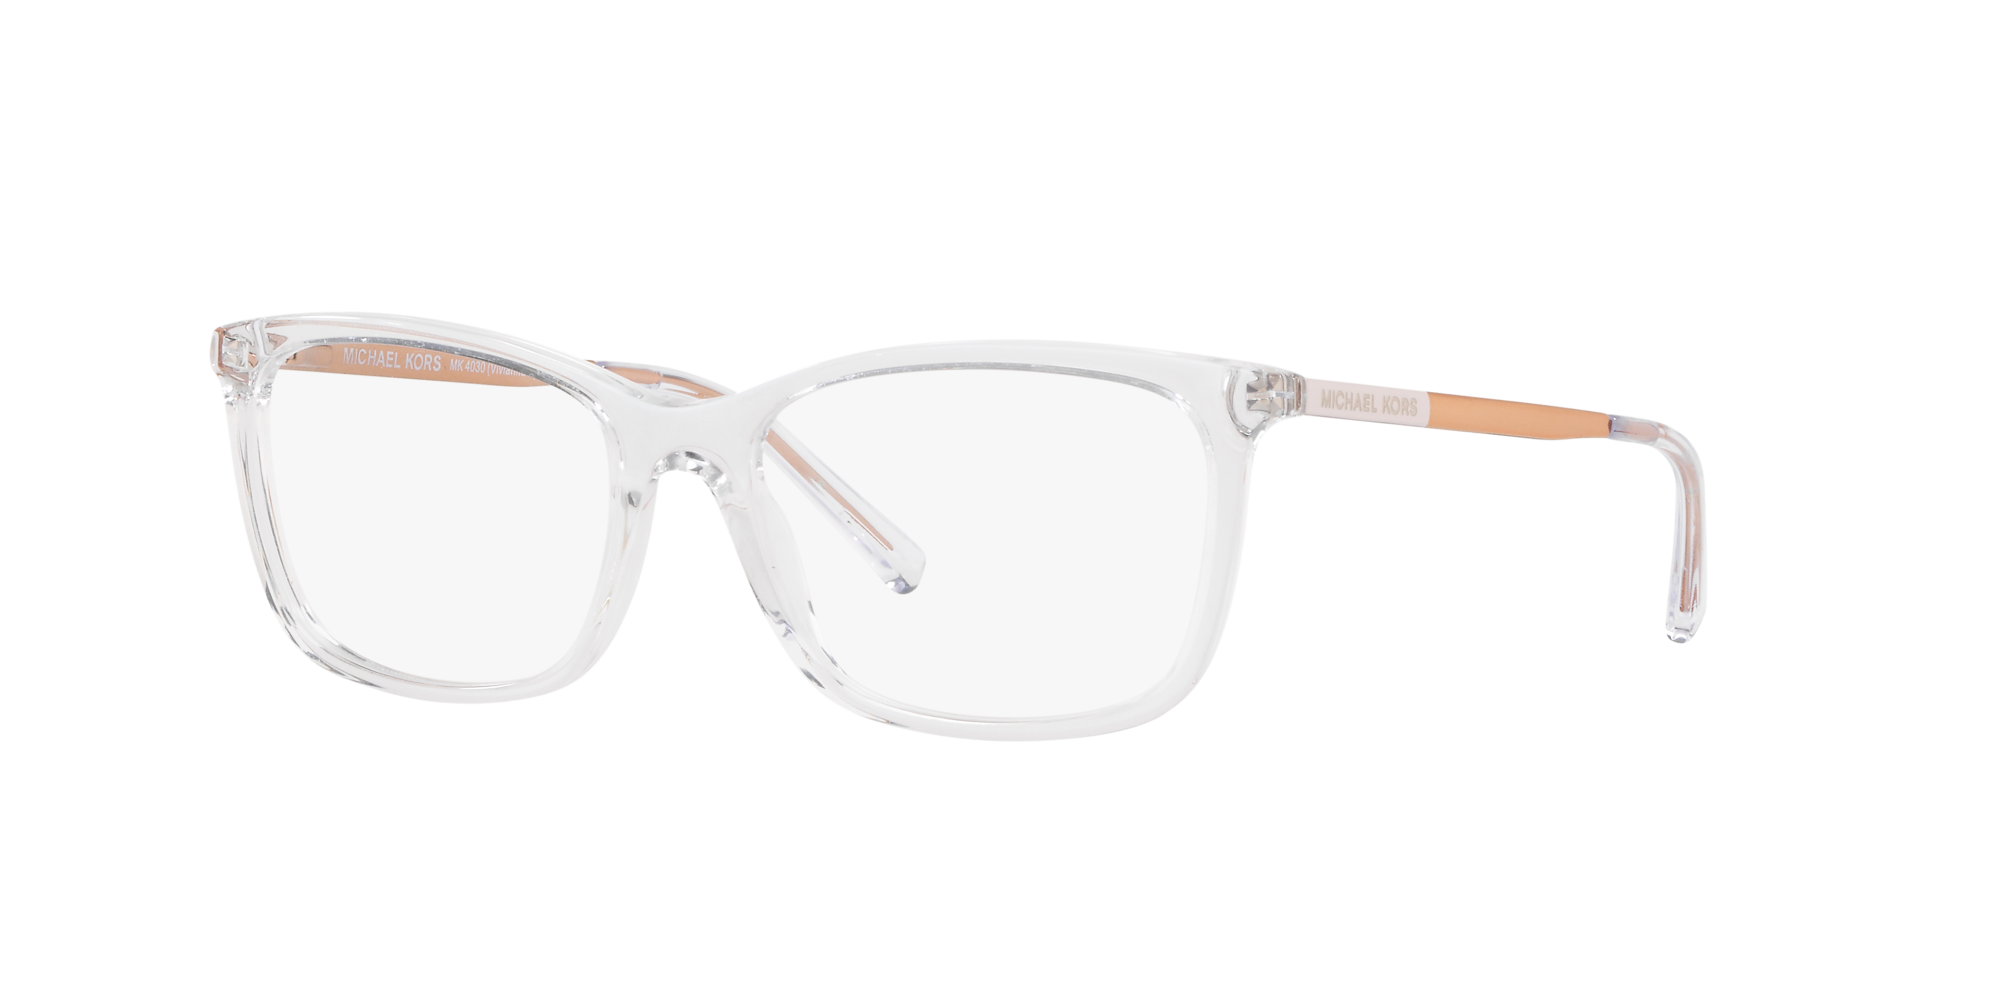 Michael Kors Clear Square Eyeglass Frames for sale  eBay